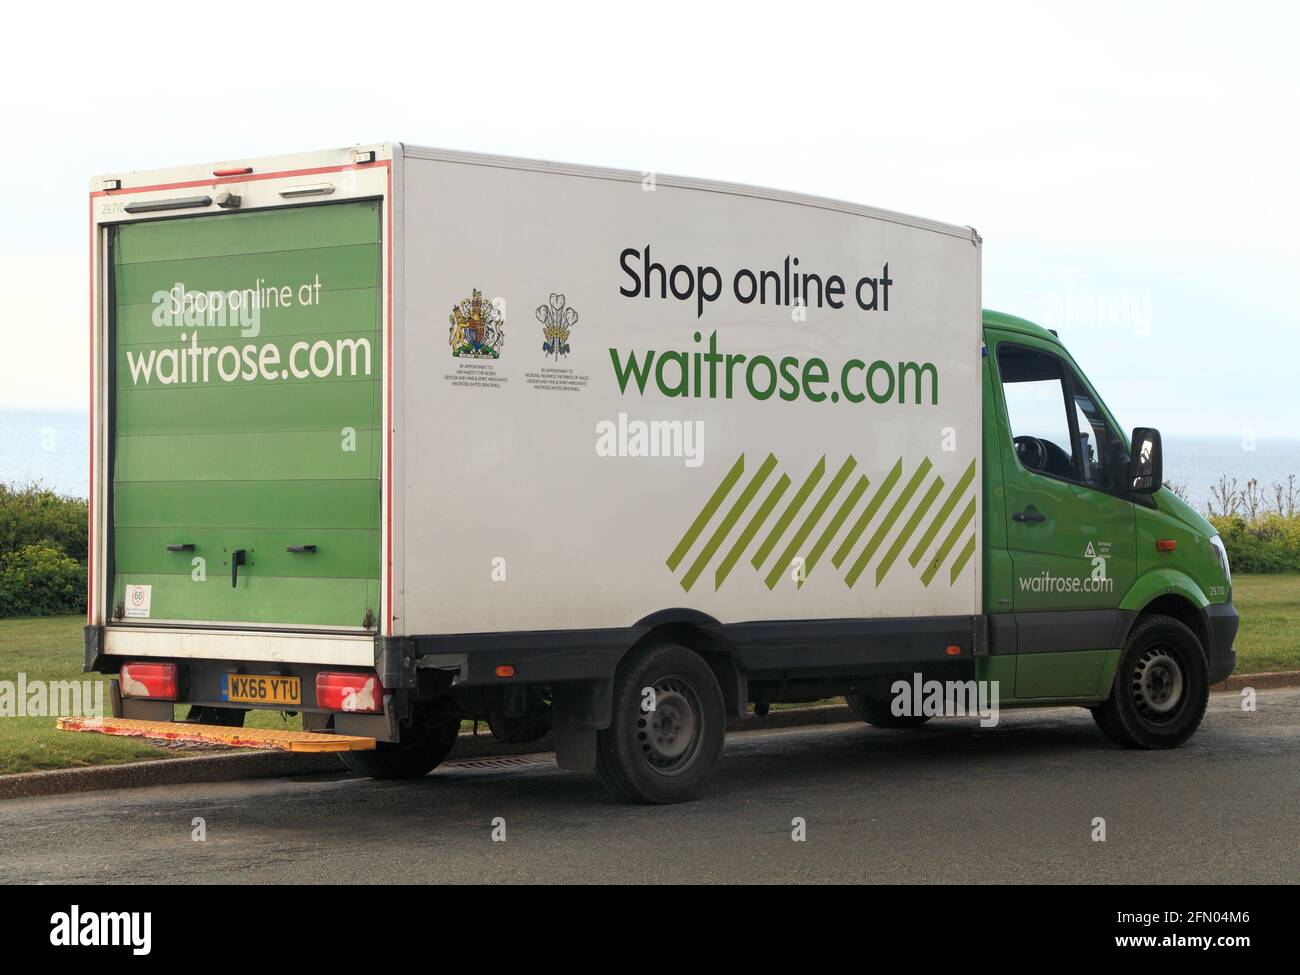 Waitrose, online shopping delivery, vehicle, van, truck, England, UK Stock  Photo - Alamy